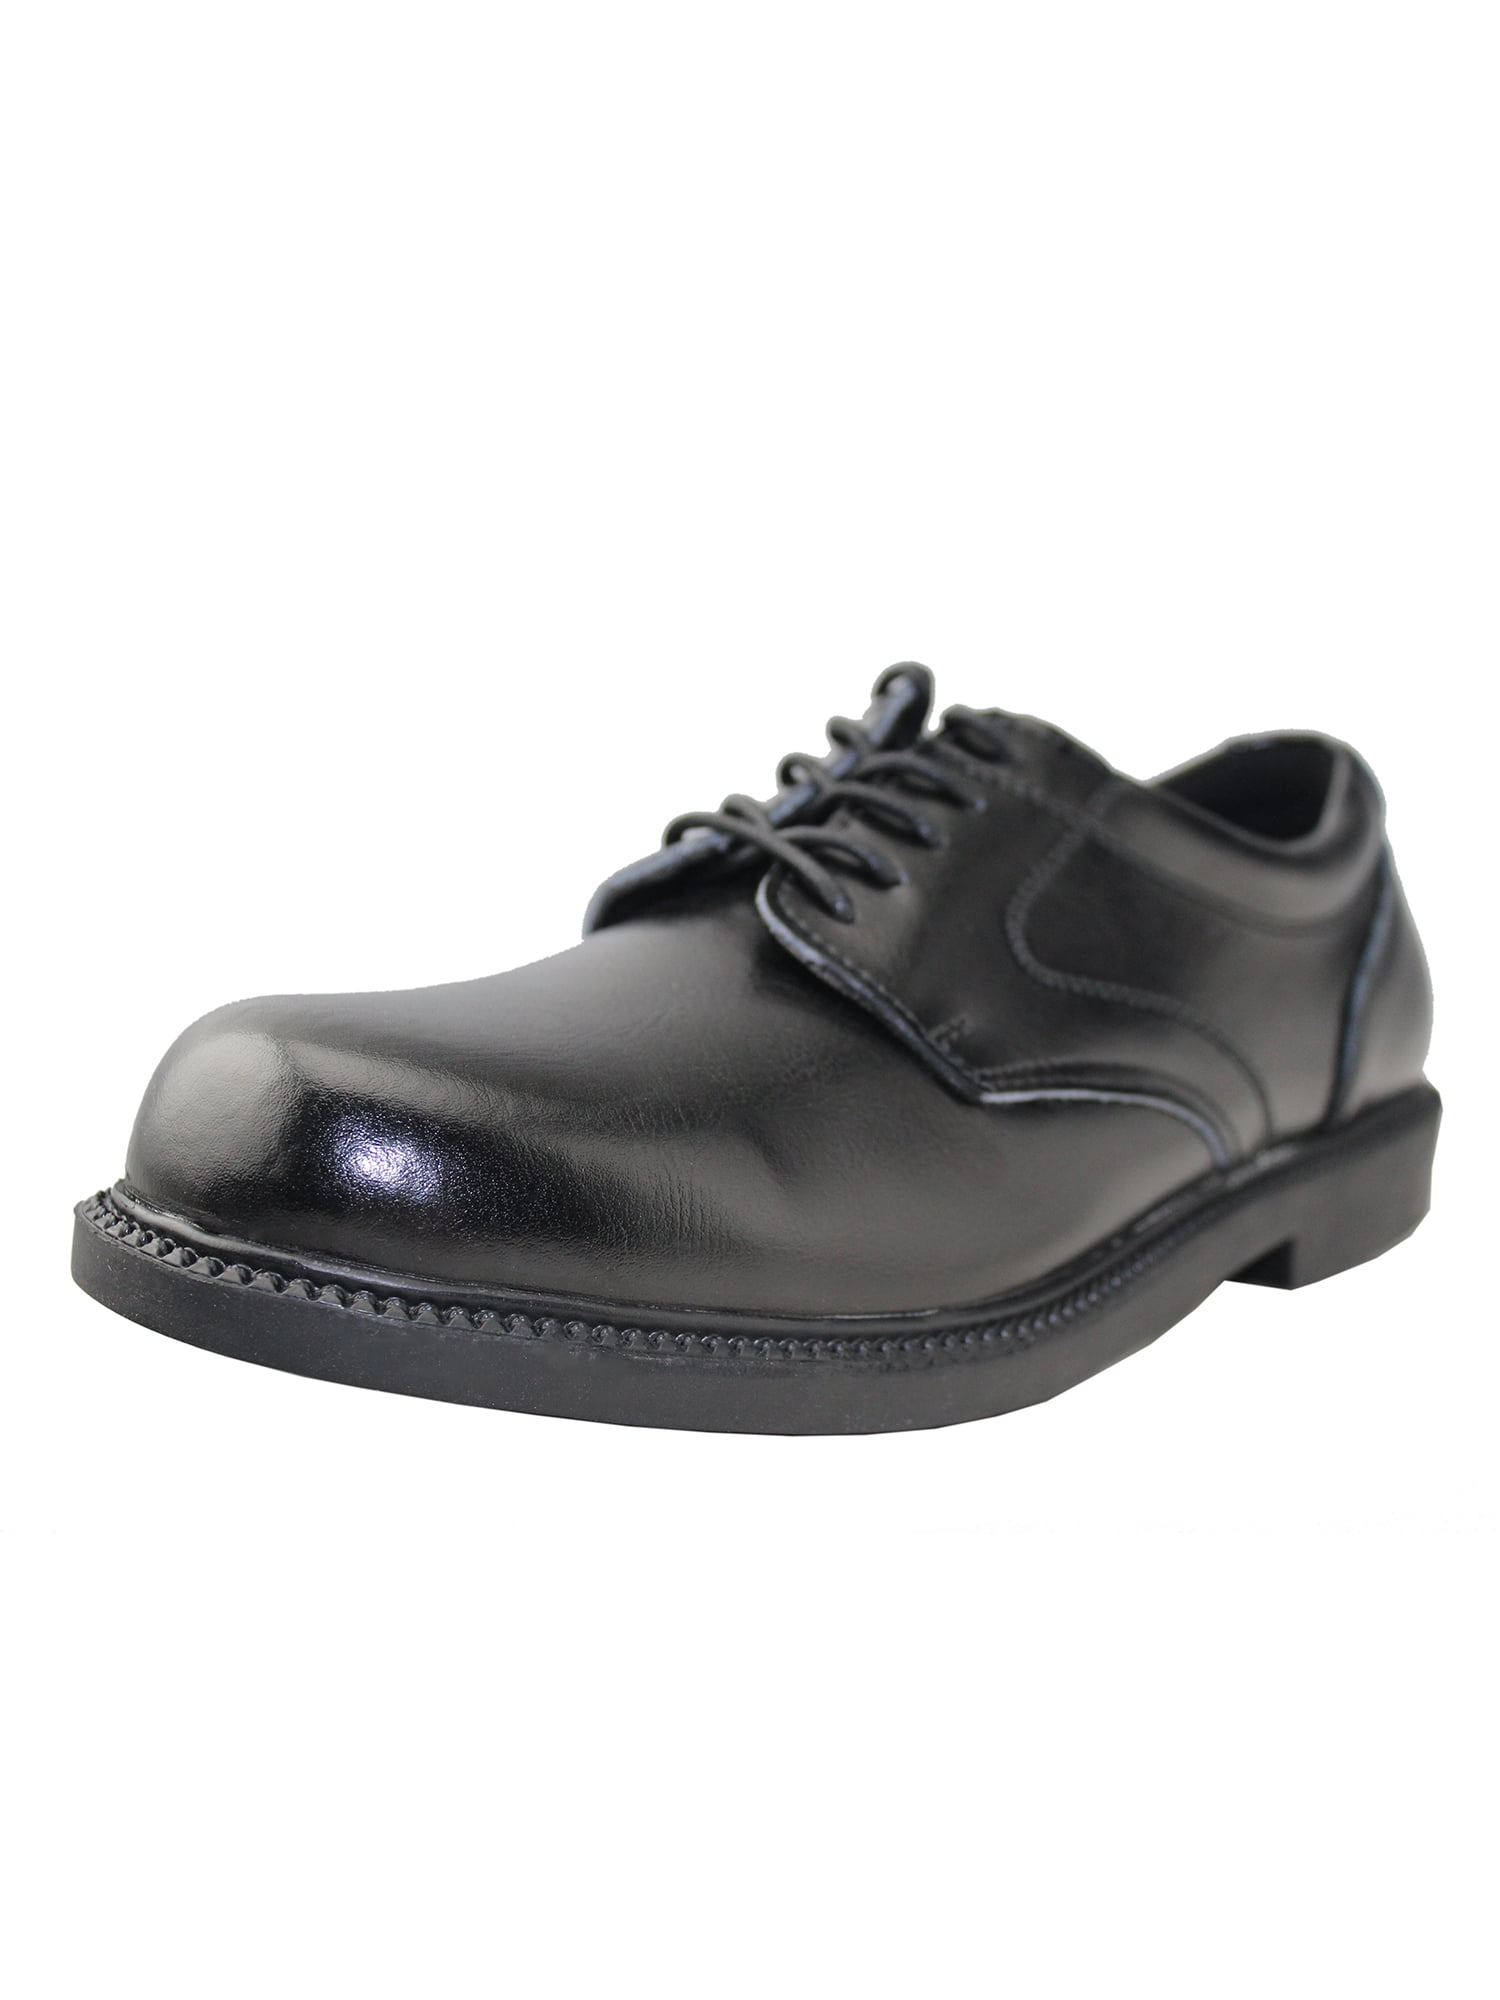 black leather shoes walmart